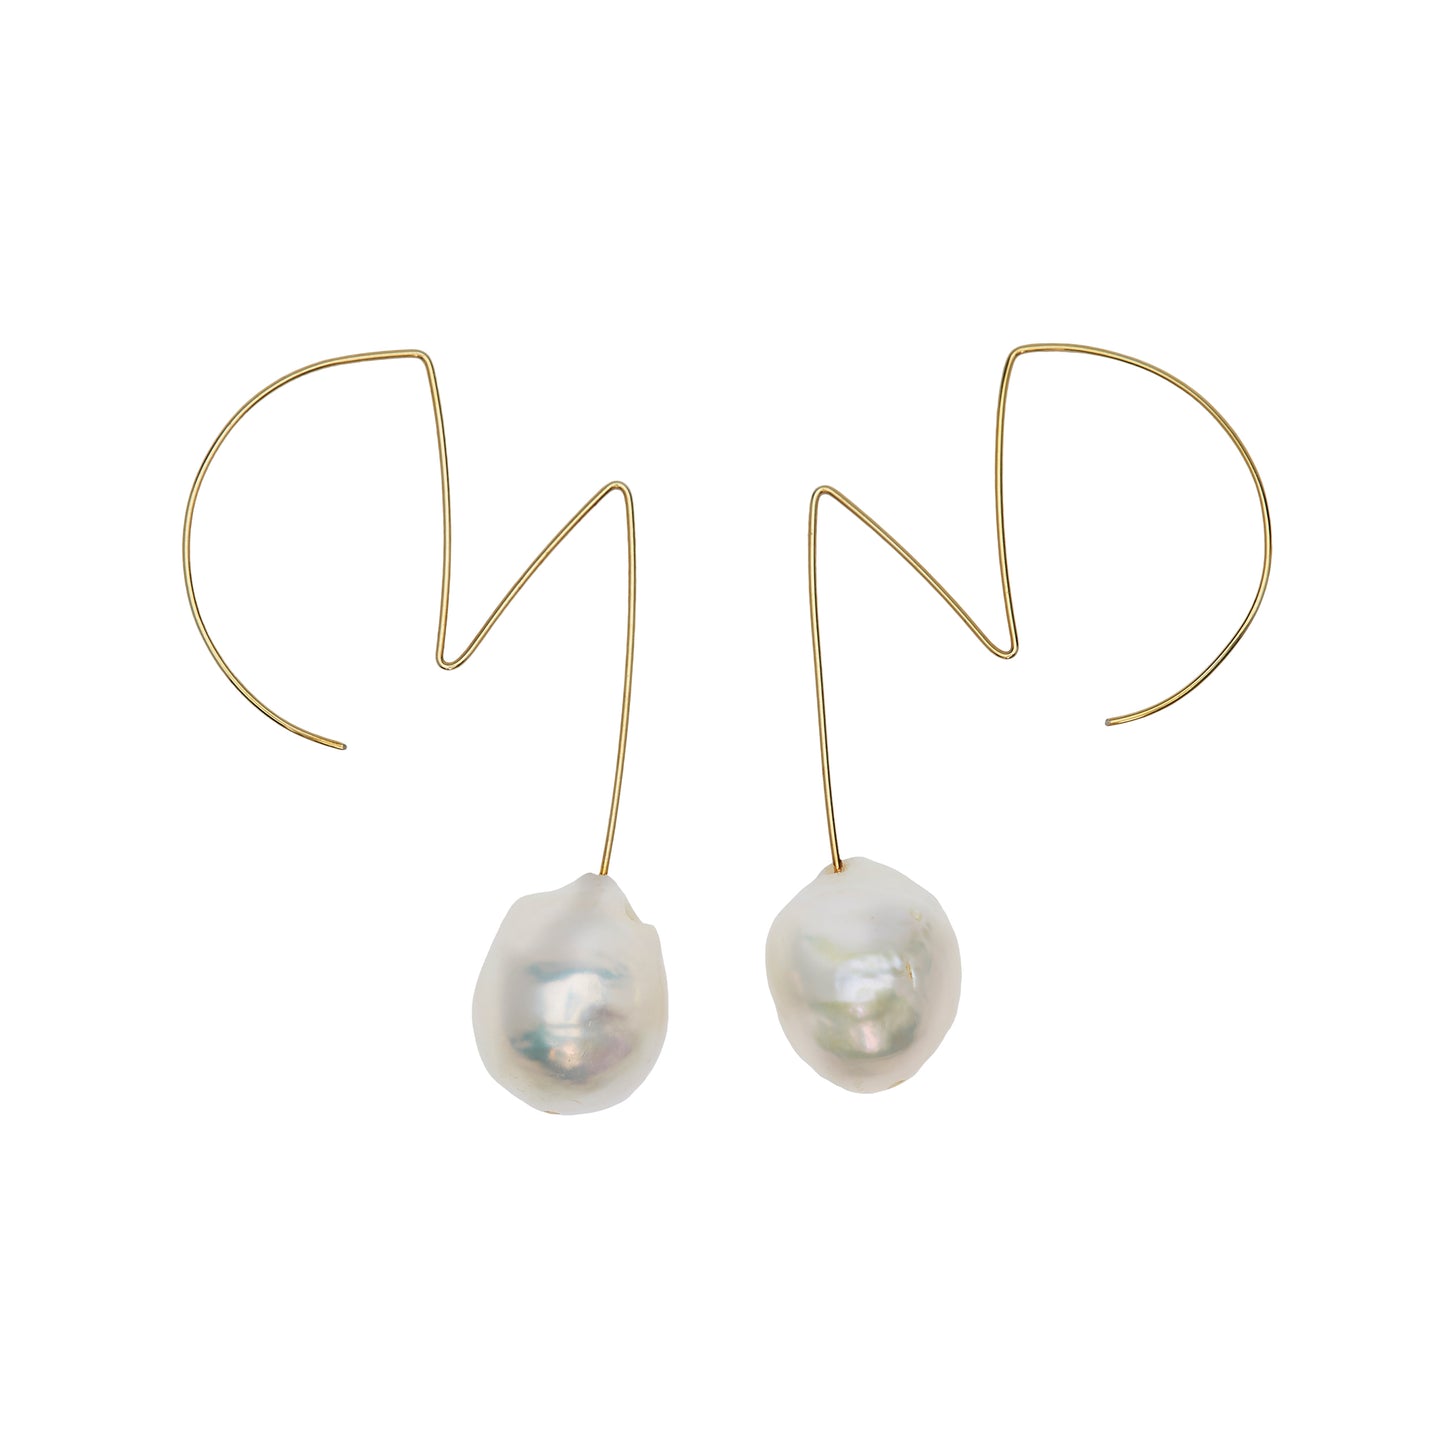 Ziggy Earrings with White Ripley Fresh Water Pearls